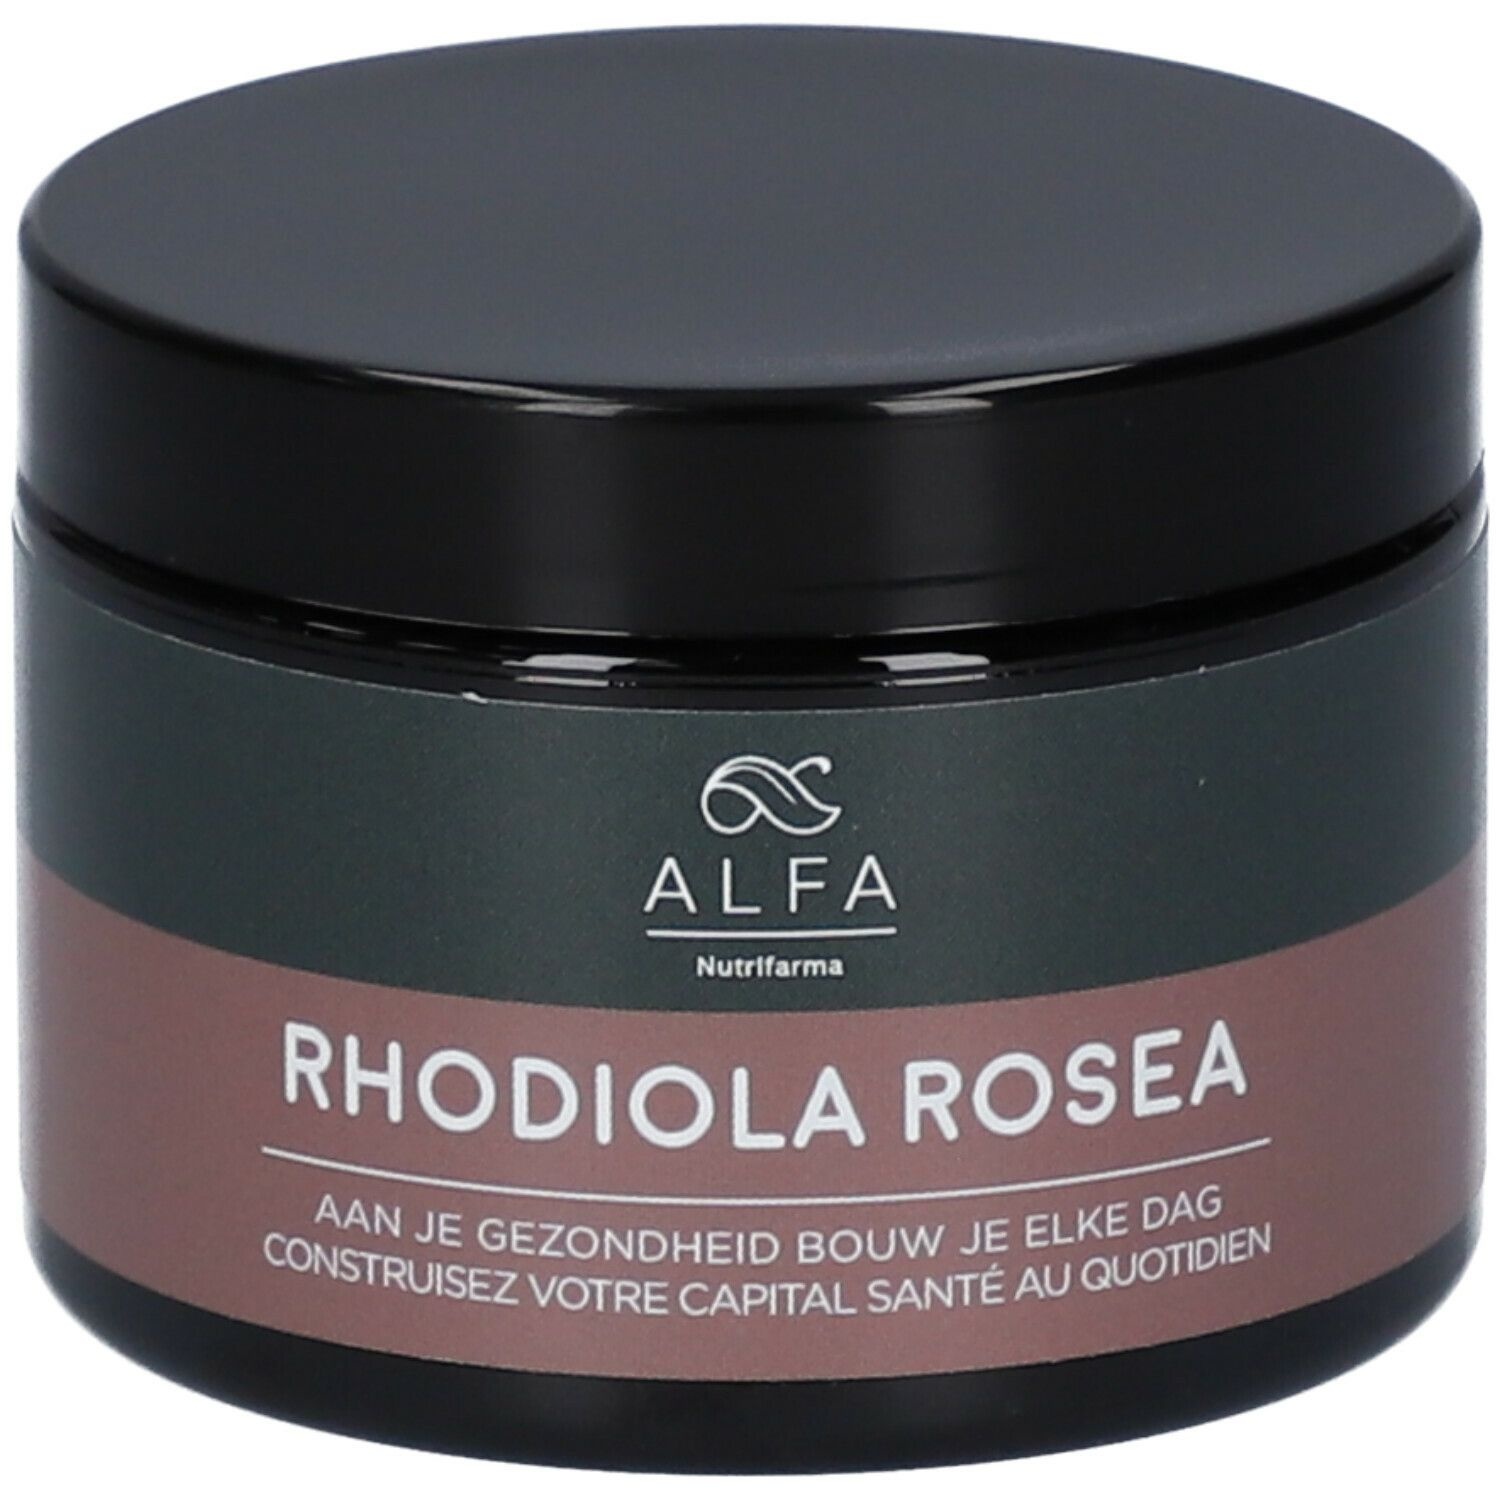 Alfa Rhodiola Rosea 60 pc(s) capsule(s)